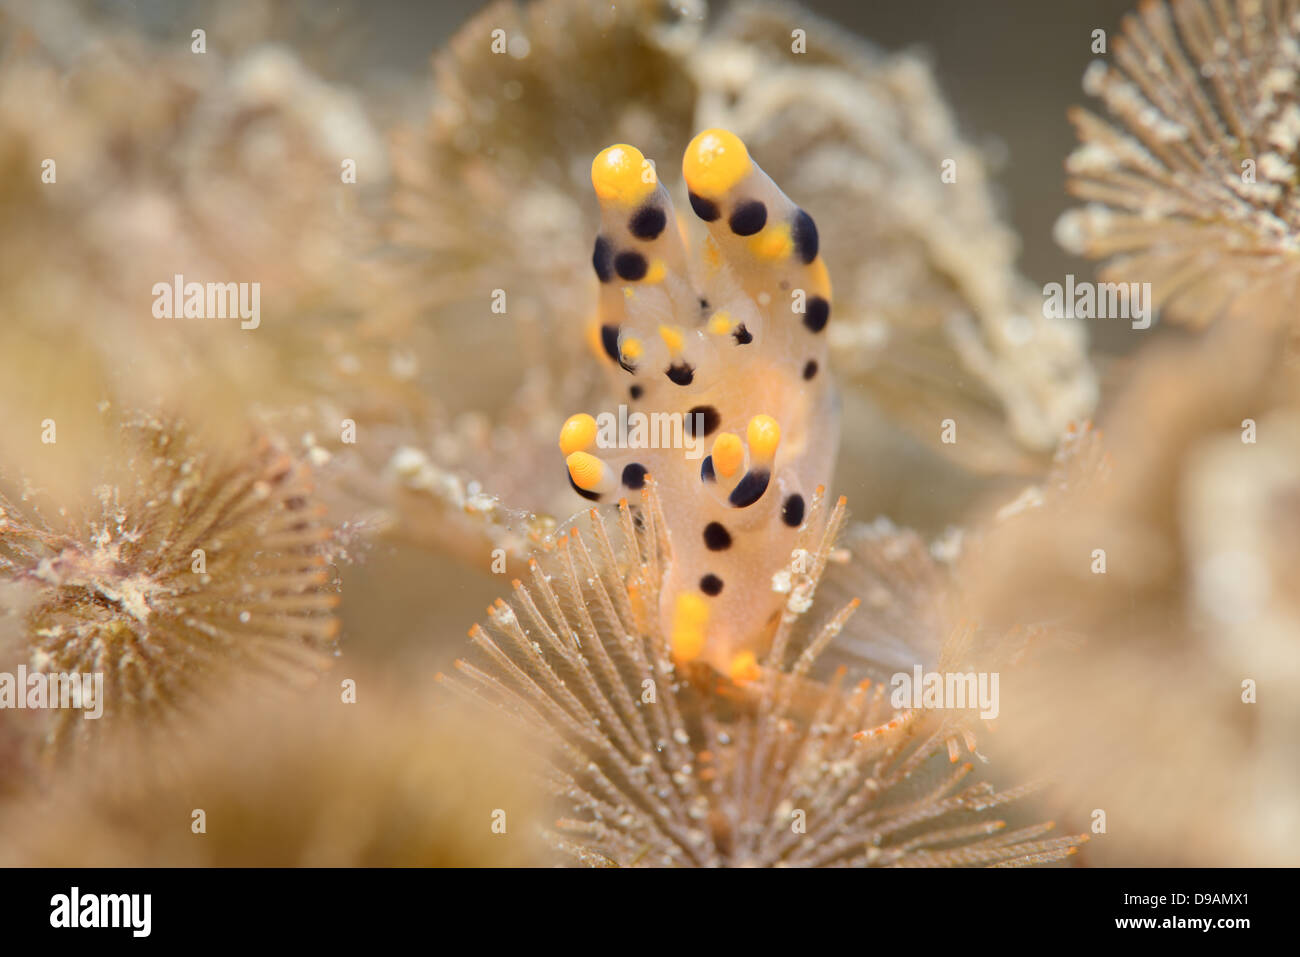 Pikachu Thecacera nudibranch amongs beautiful pink sea plants where it feeds from. Stock Photo